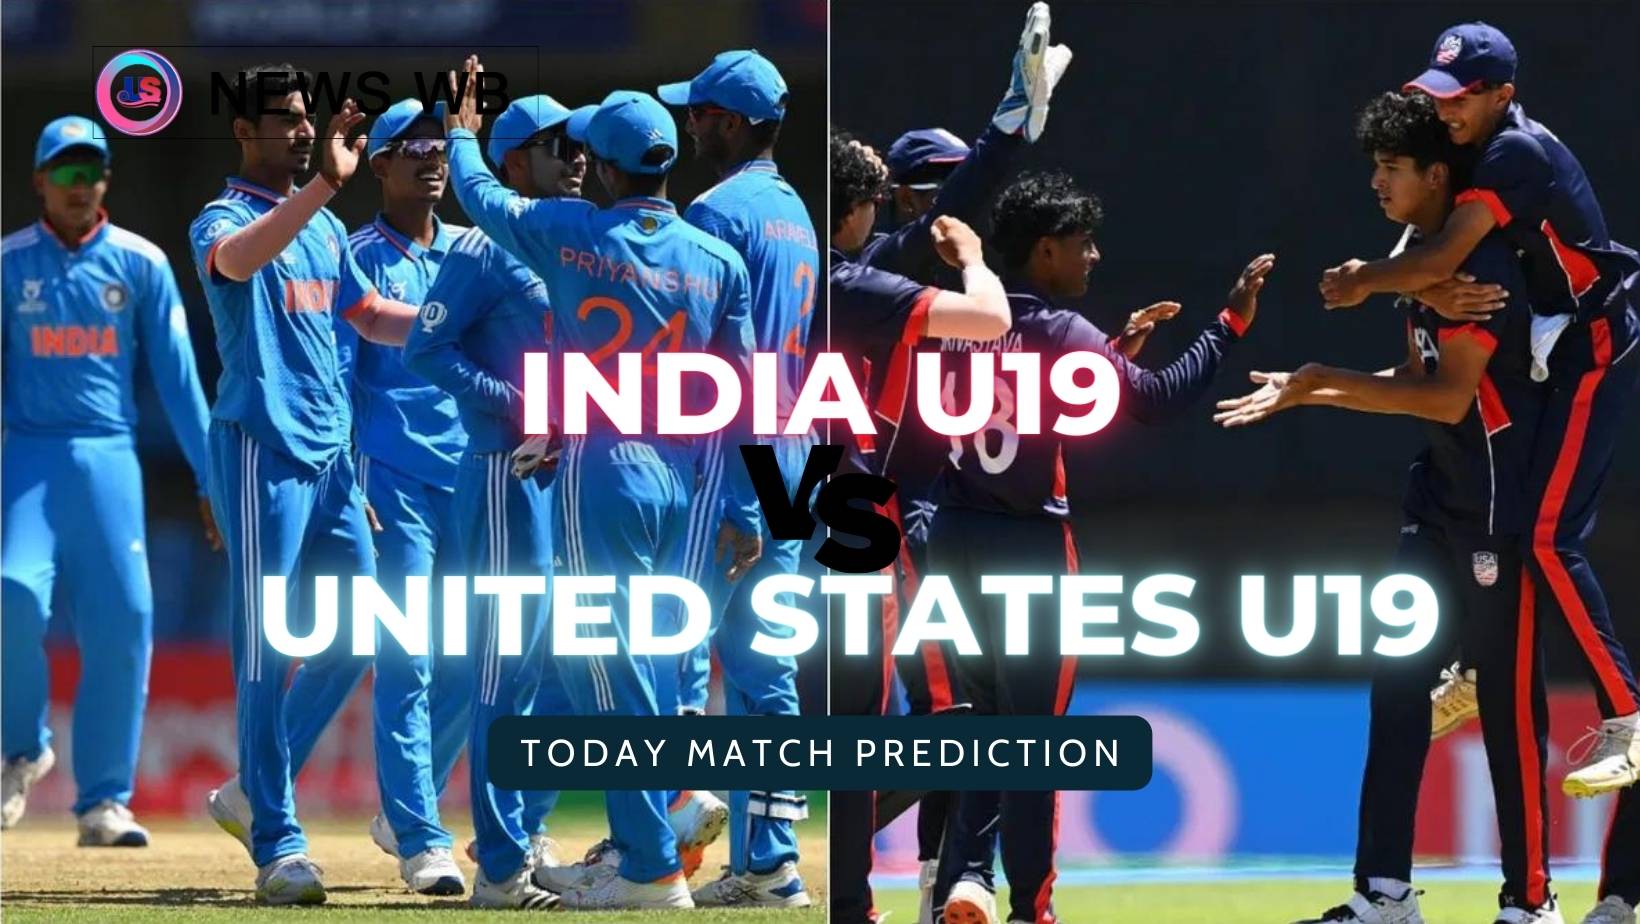 Today Match Prediction: IND U19 vs USA U19 Dream11 Team, India U19 vs United States U19 23rd Match, Group A, Who Will Win?